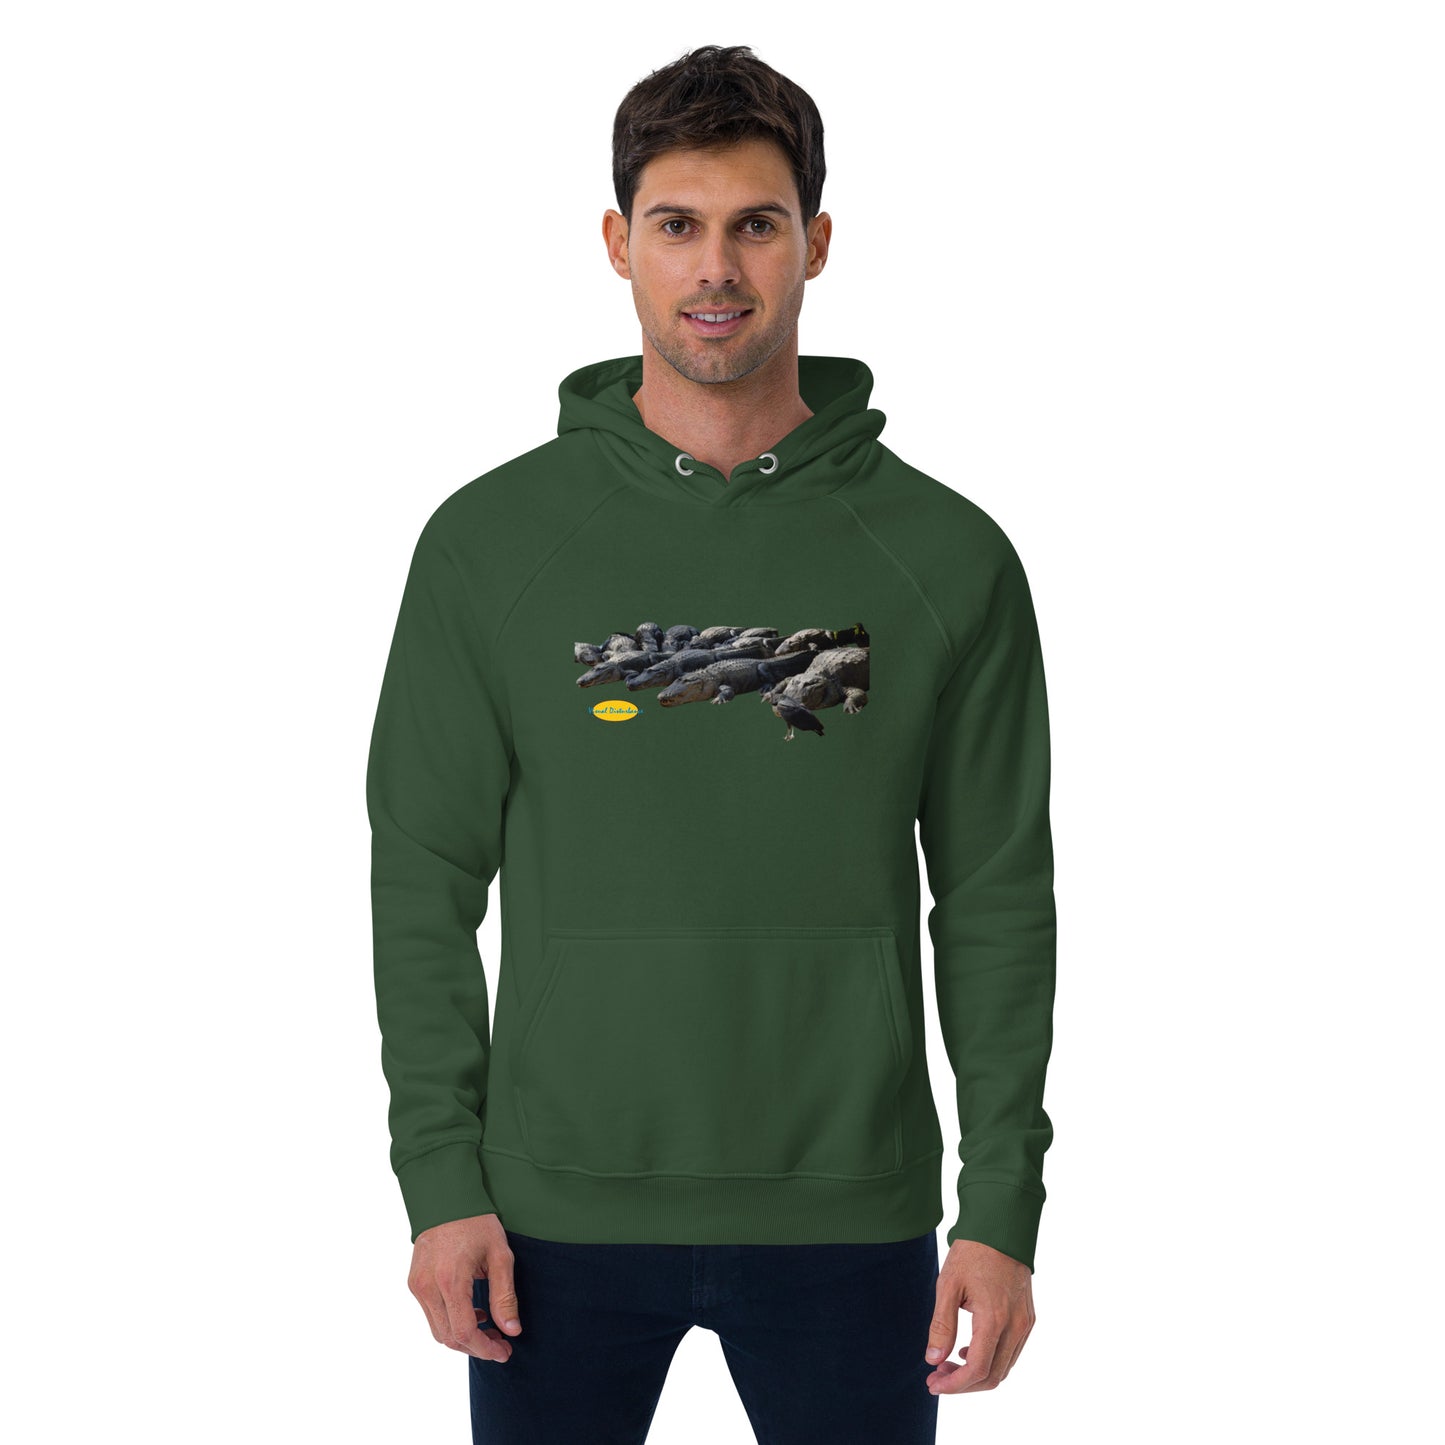 A Vulture and Alligators Unisex eco raglan hoodie